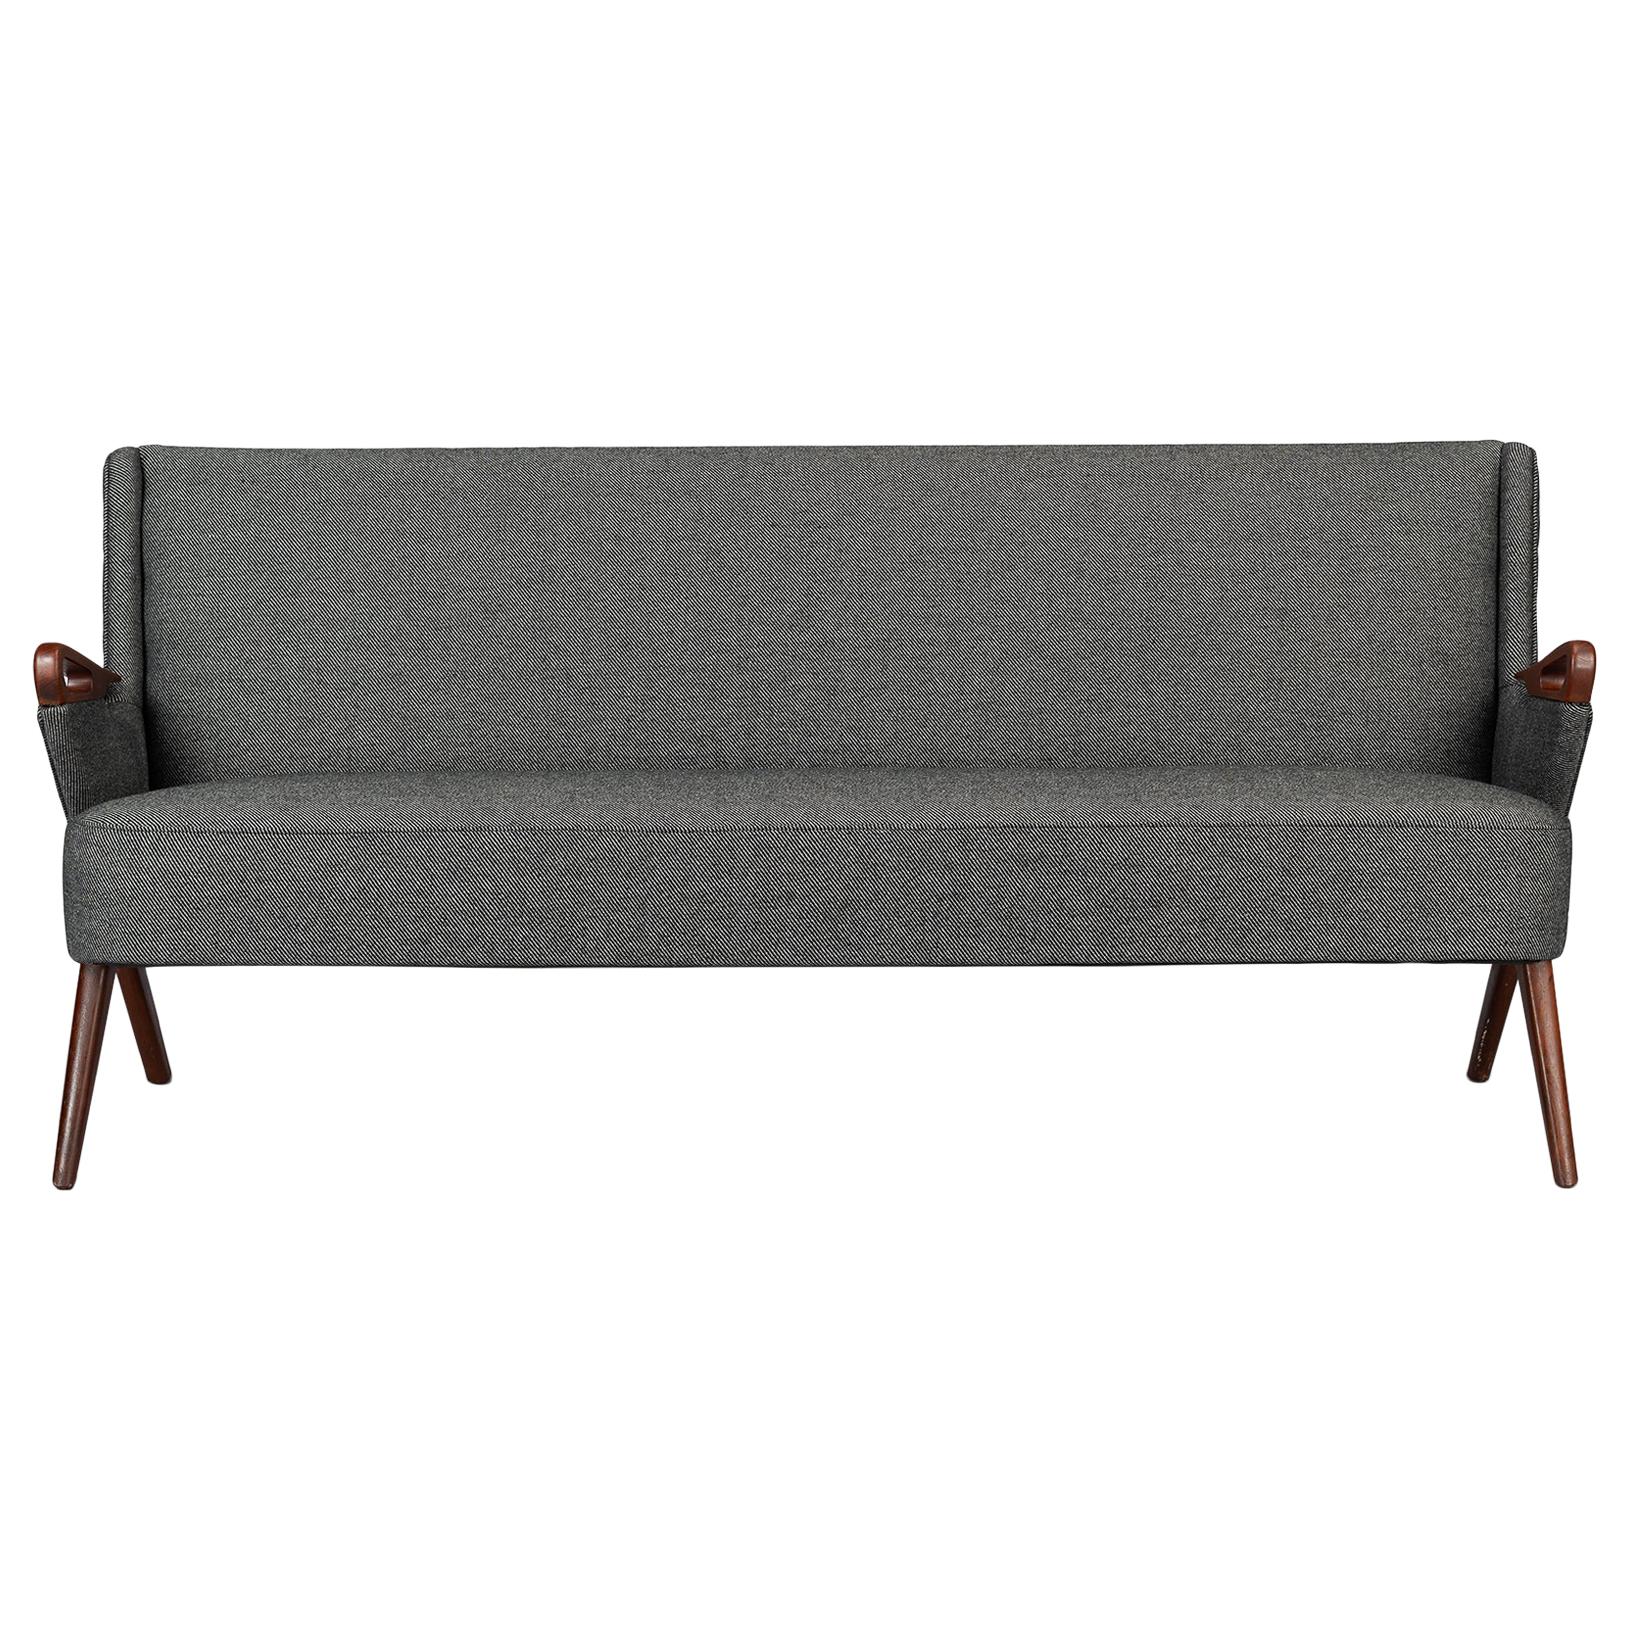 Reupholstered Dark Grey 2.5 Seat Sofa No. Cfb52 by C. Findahl Brodersen, 1950s